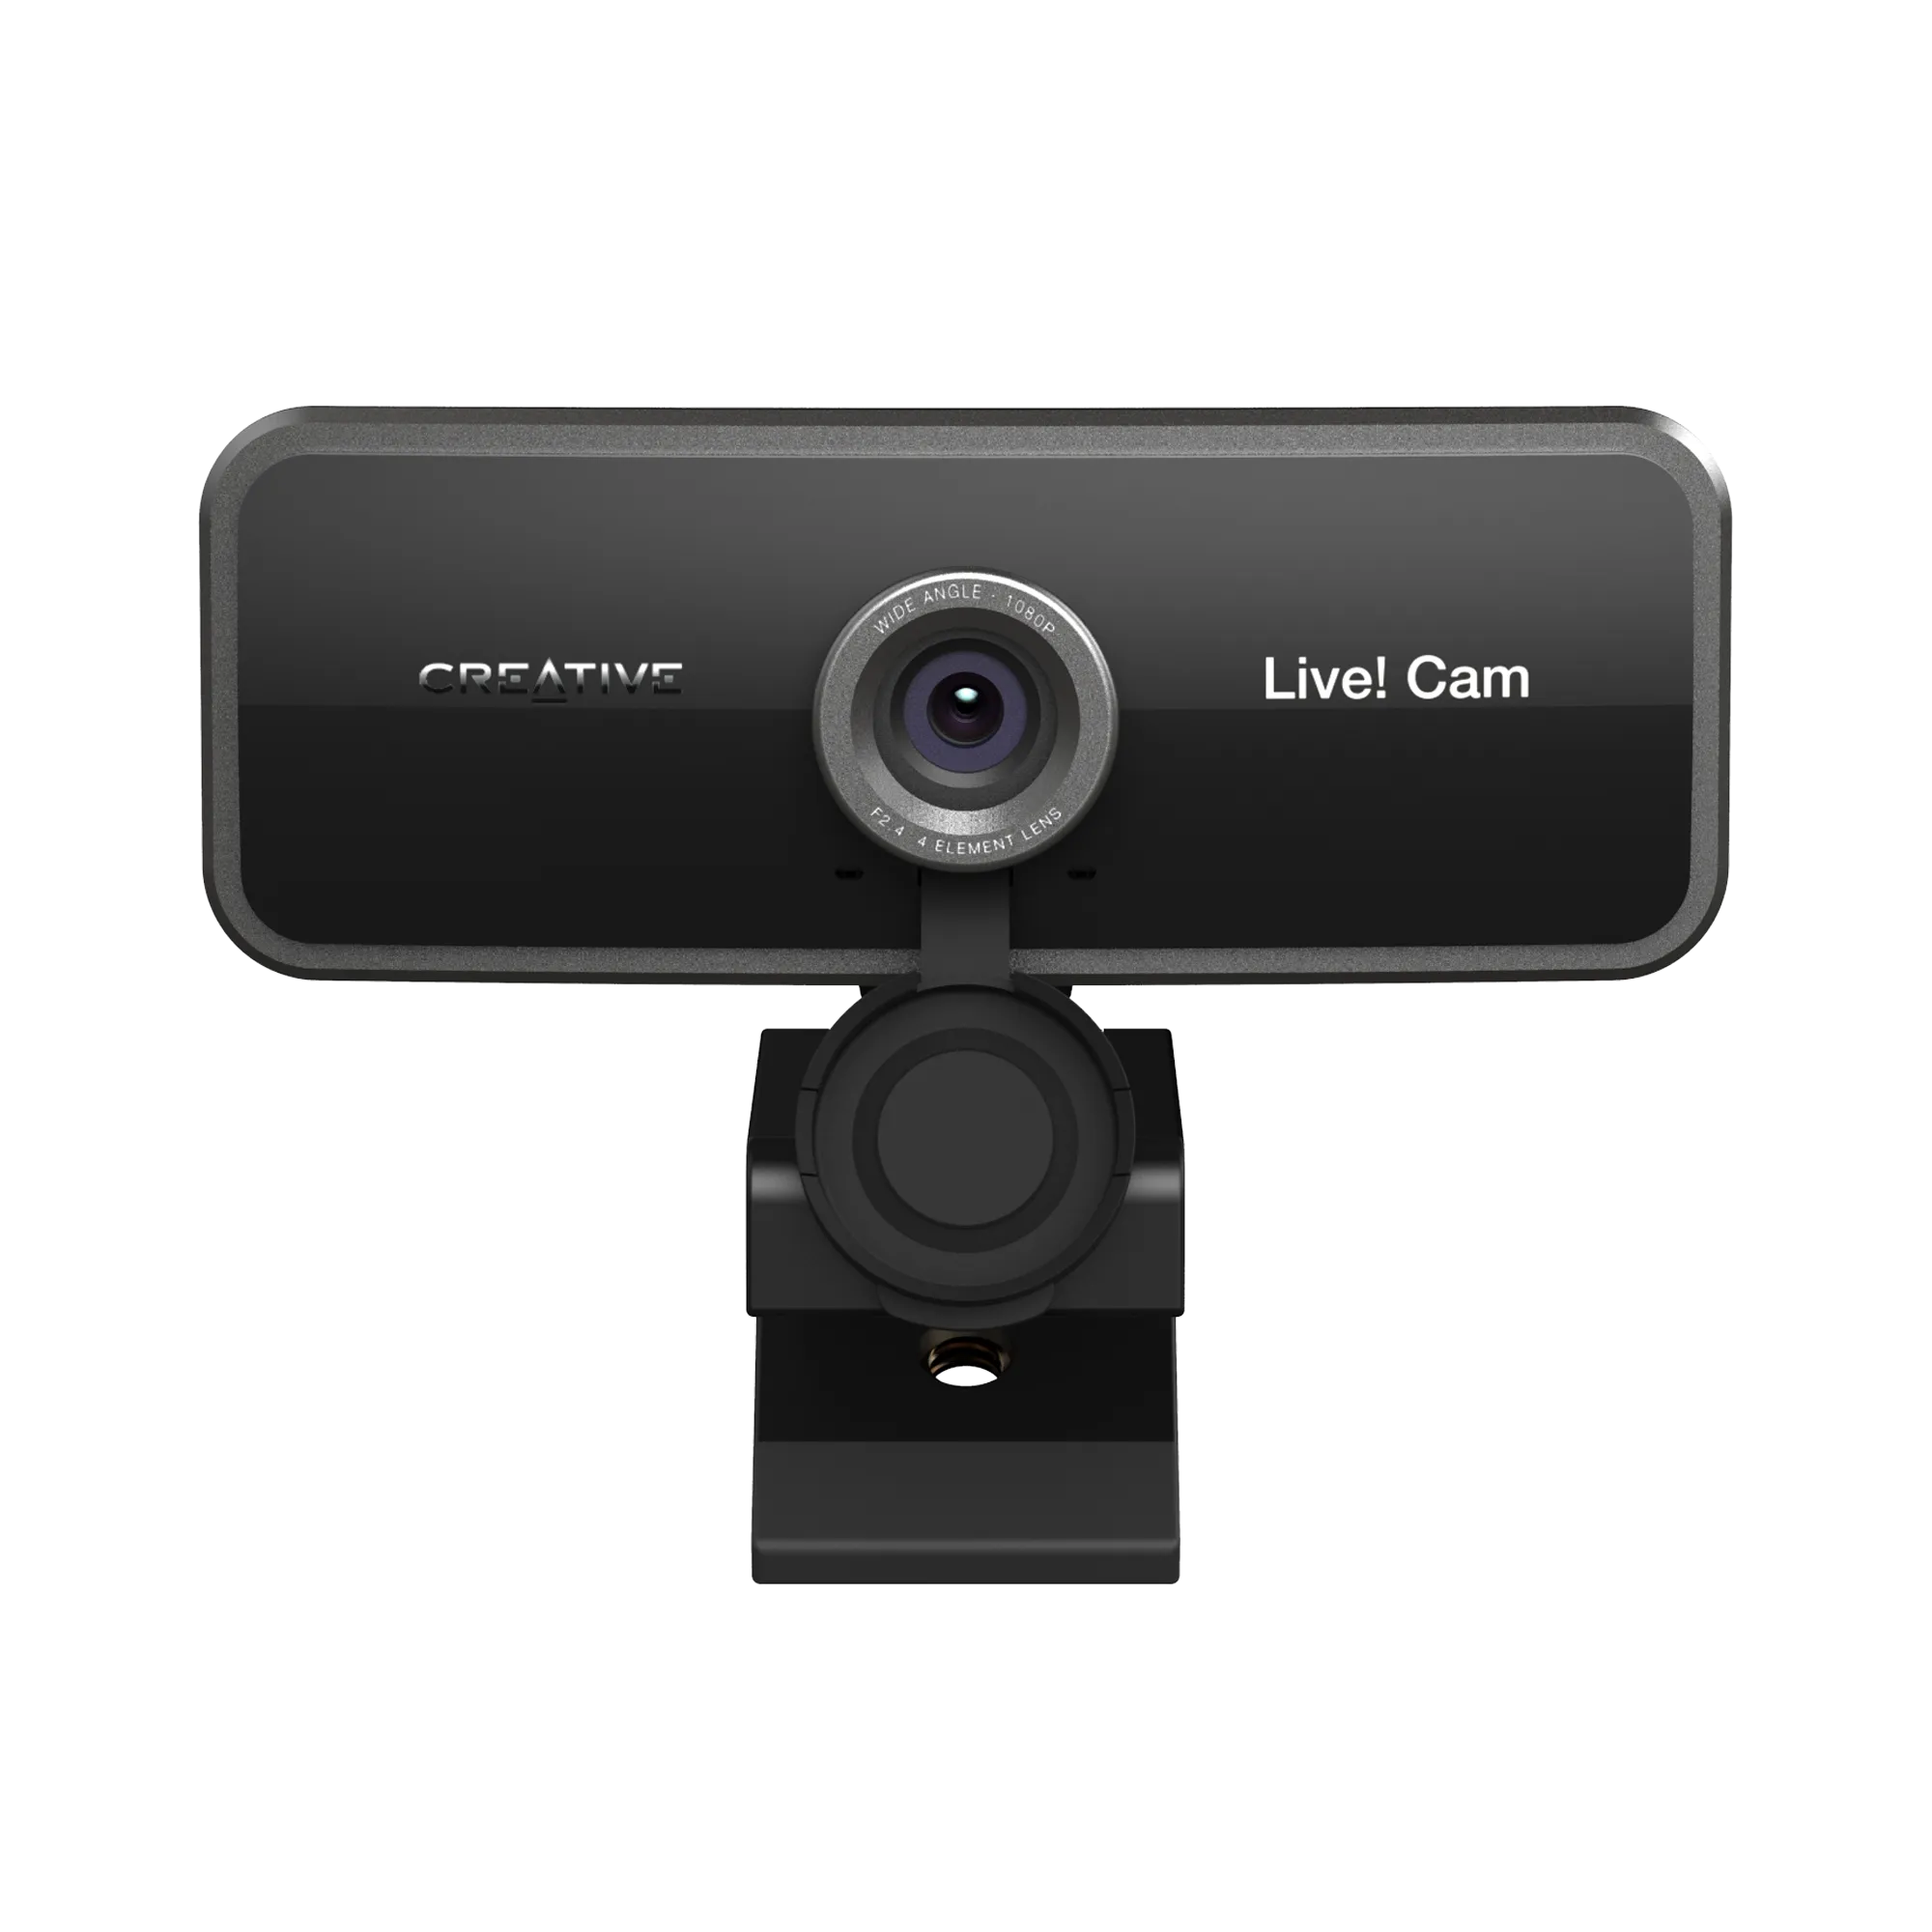 Web-камера Creative Live! Cam sync 1080p v2. Creative Live! Cam sync 1080p. Камера Creative Live cam vf0220. Creative Live! Cam sync 1080p v2 v3. Камера creative live